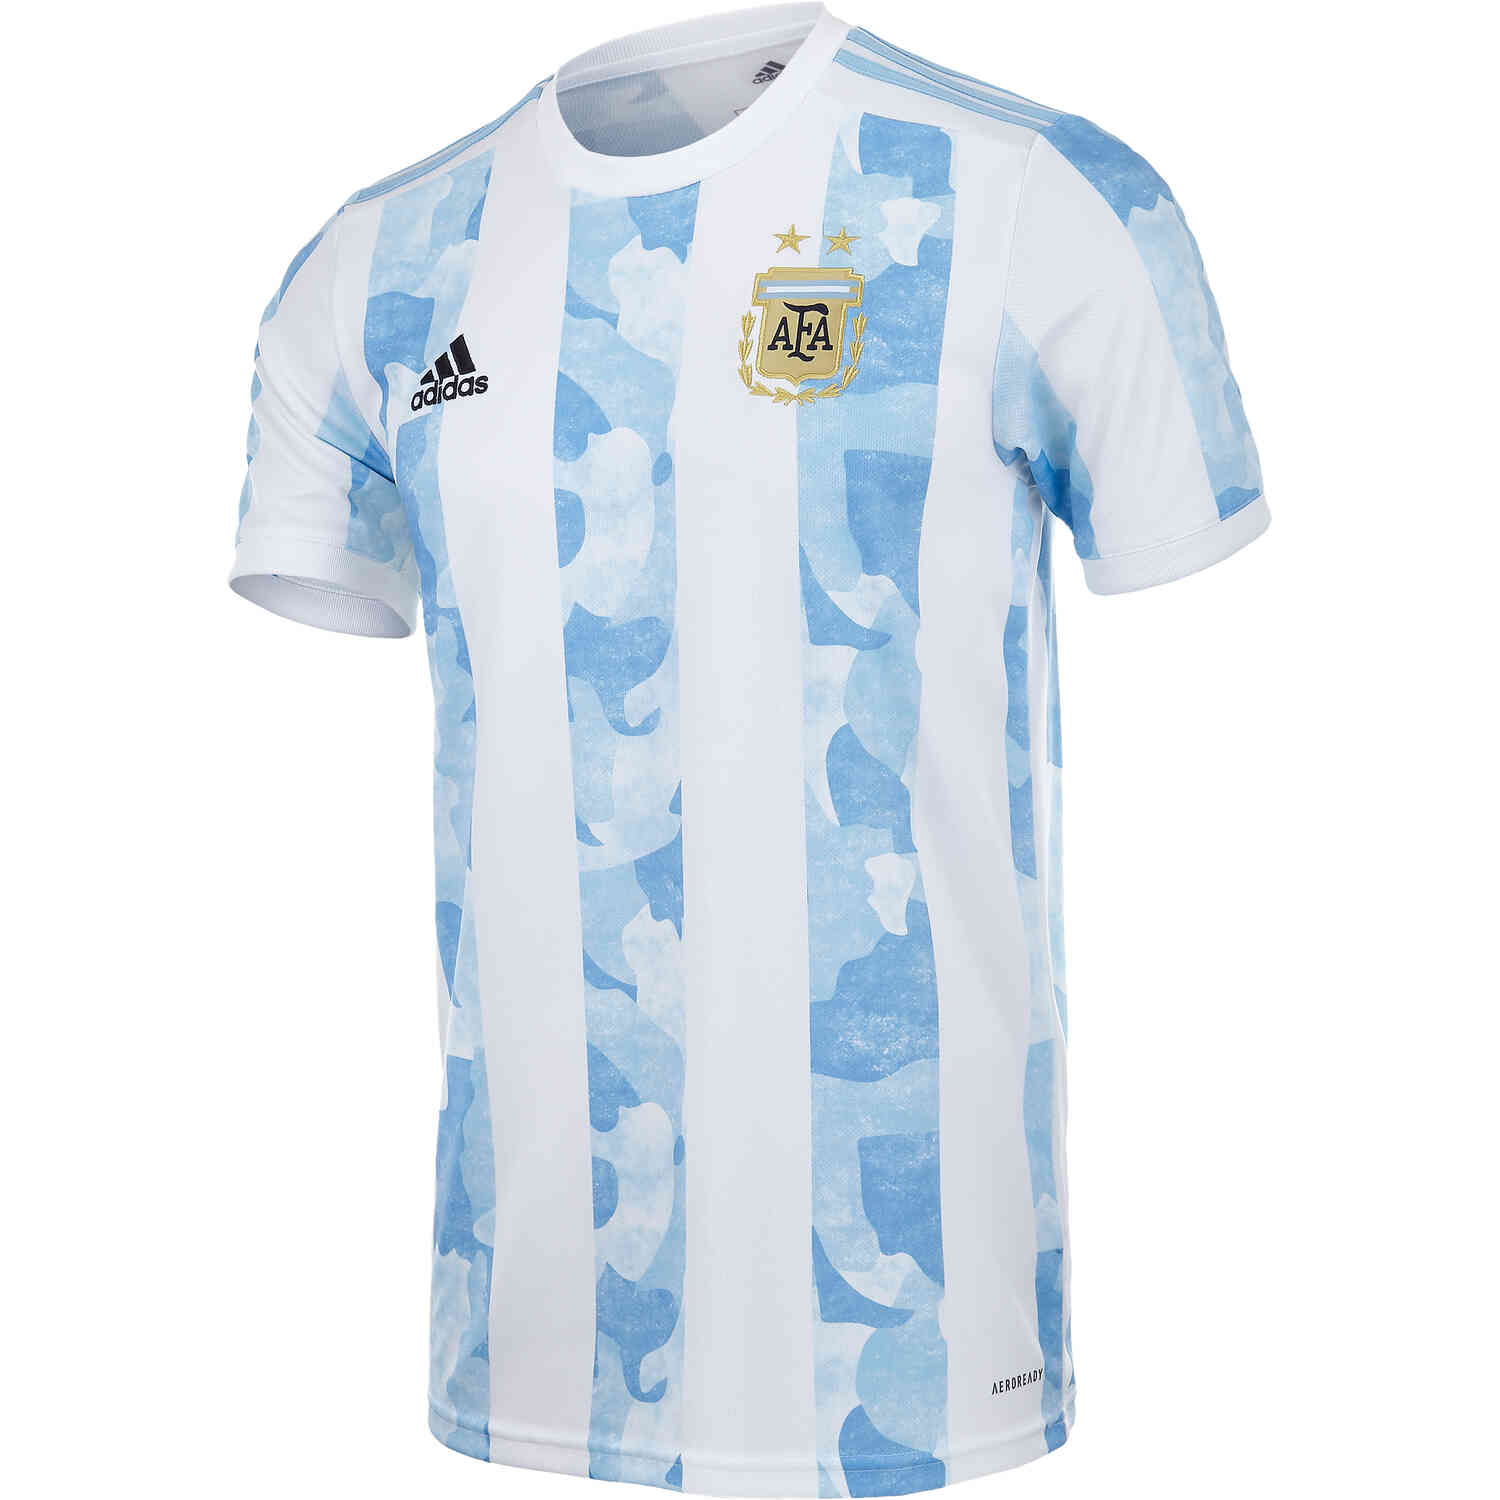 argentina football jersey 2020